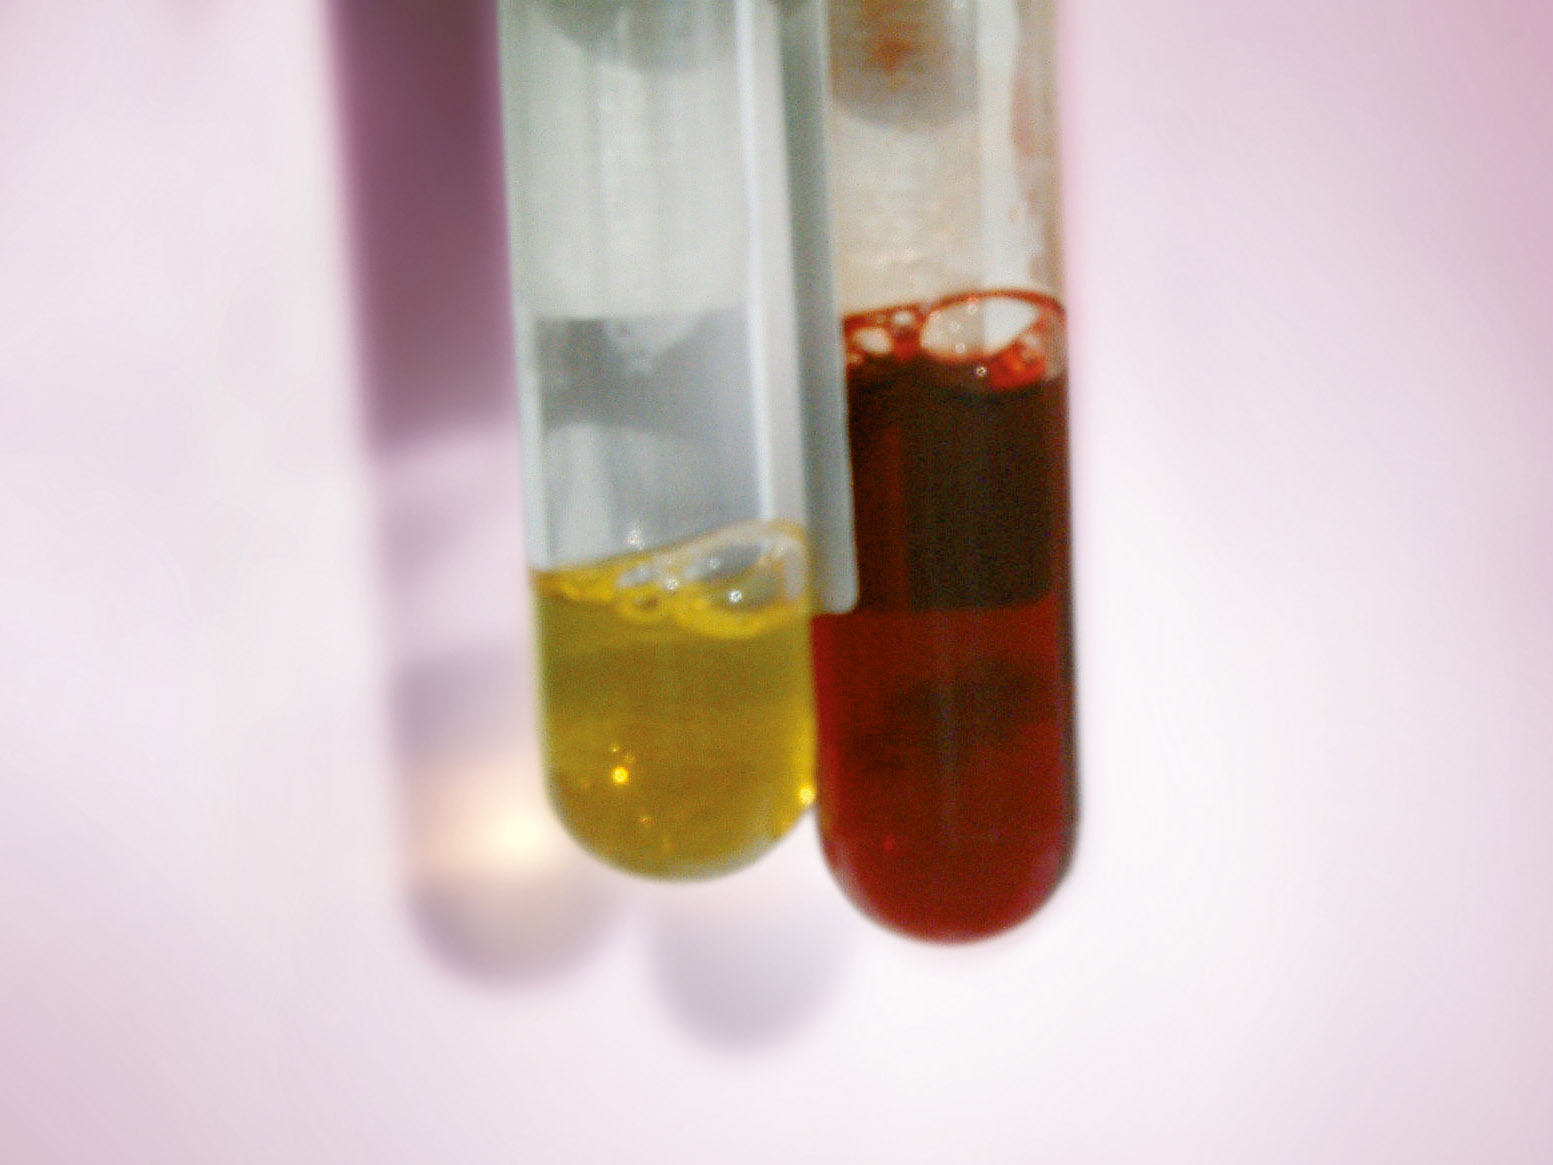 Blood sample reflecting acute intravascular haemolysis